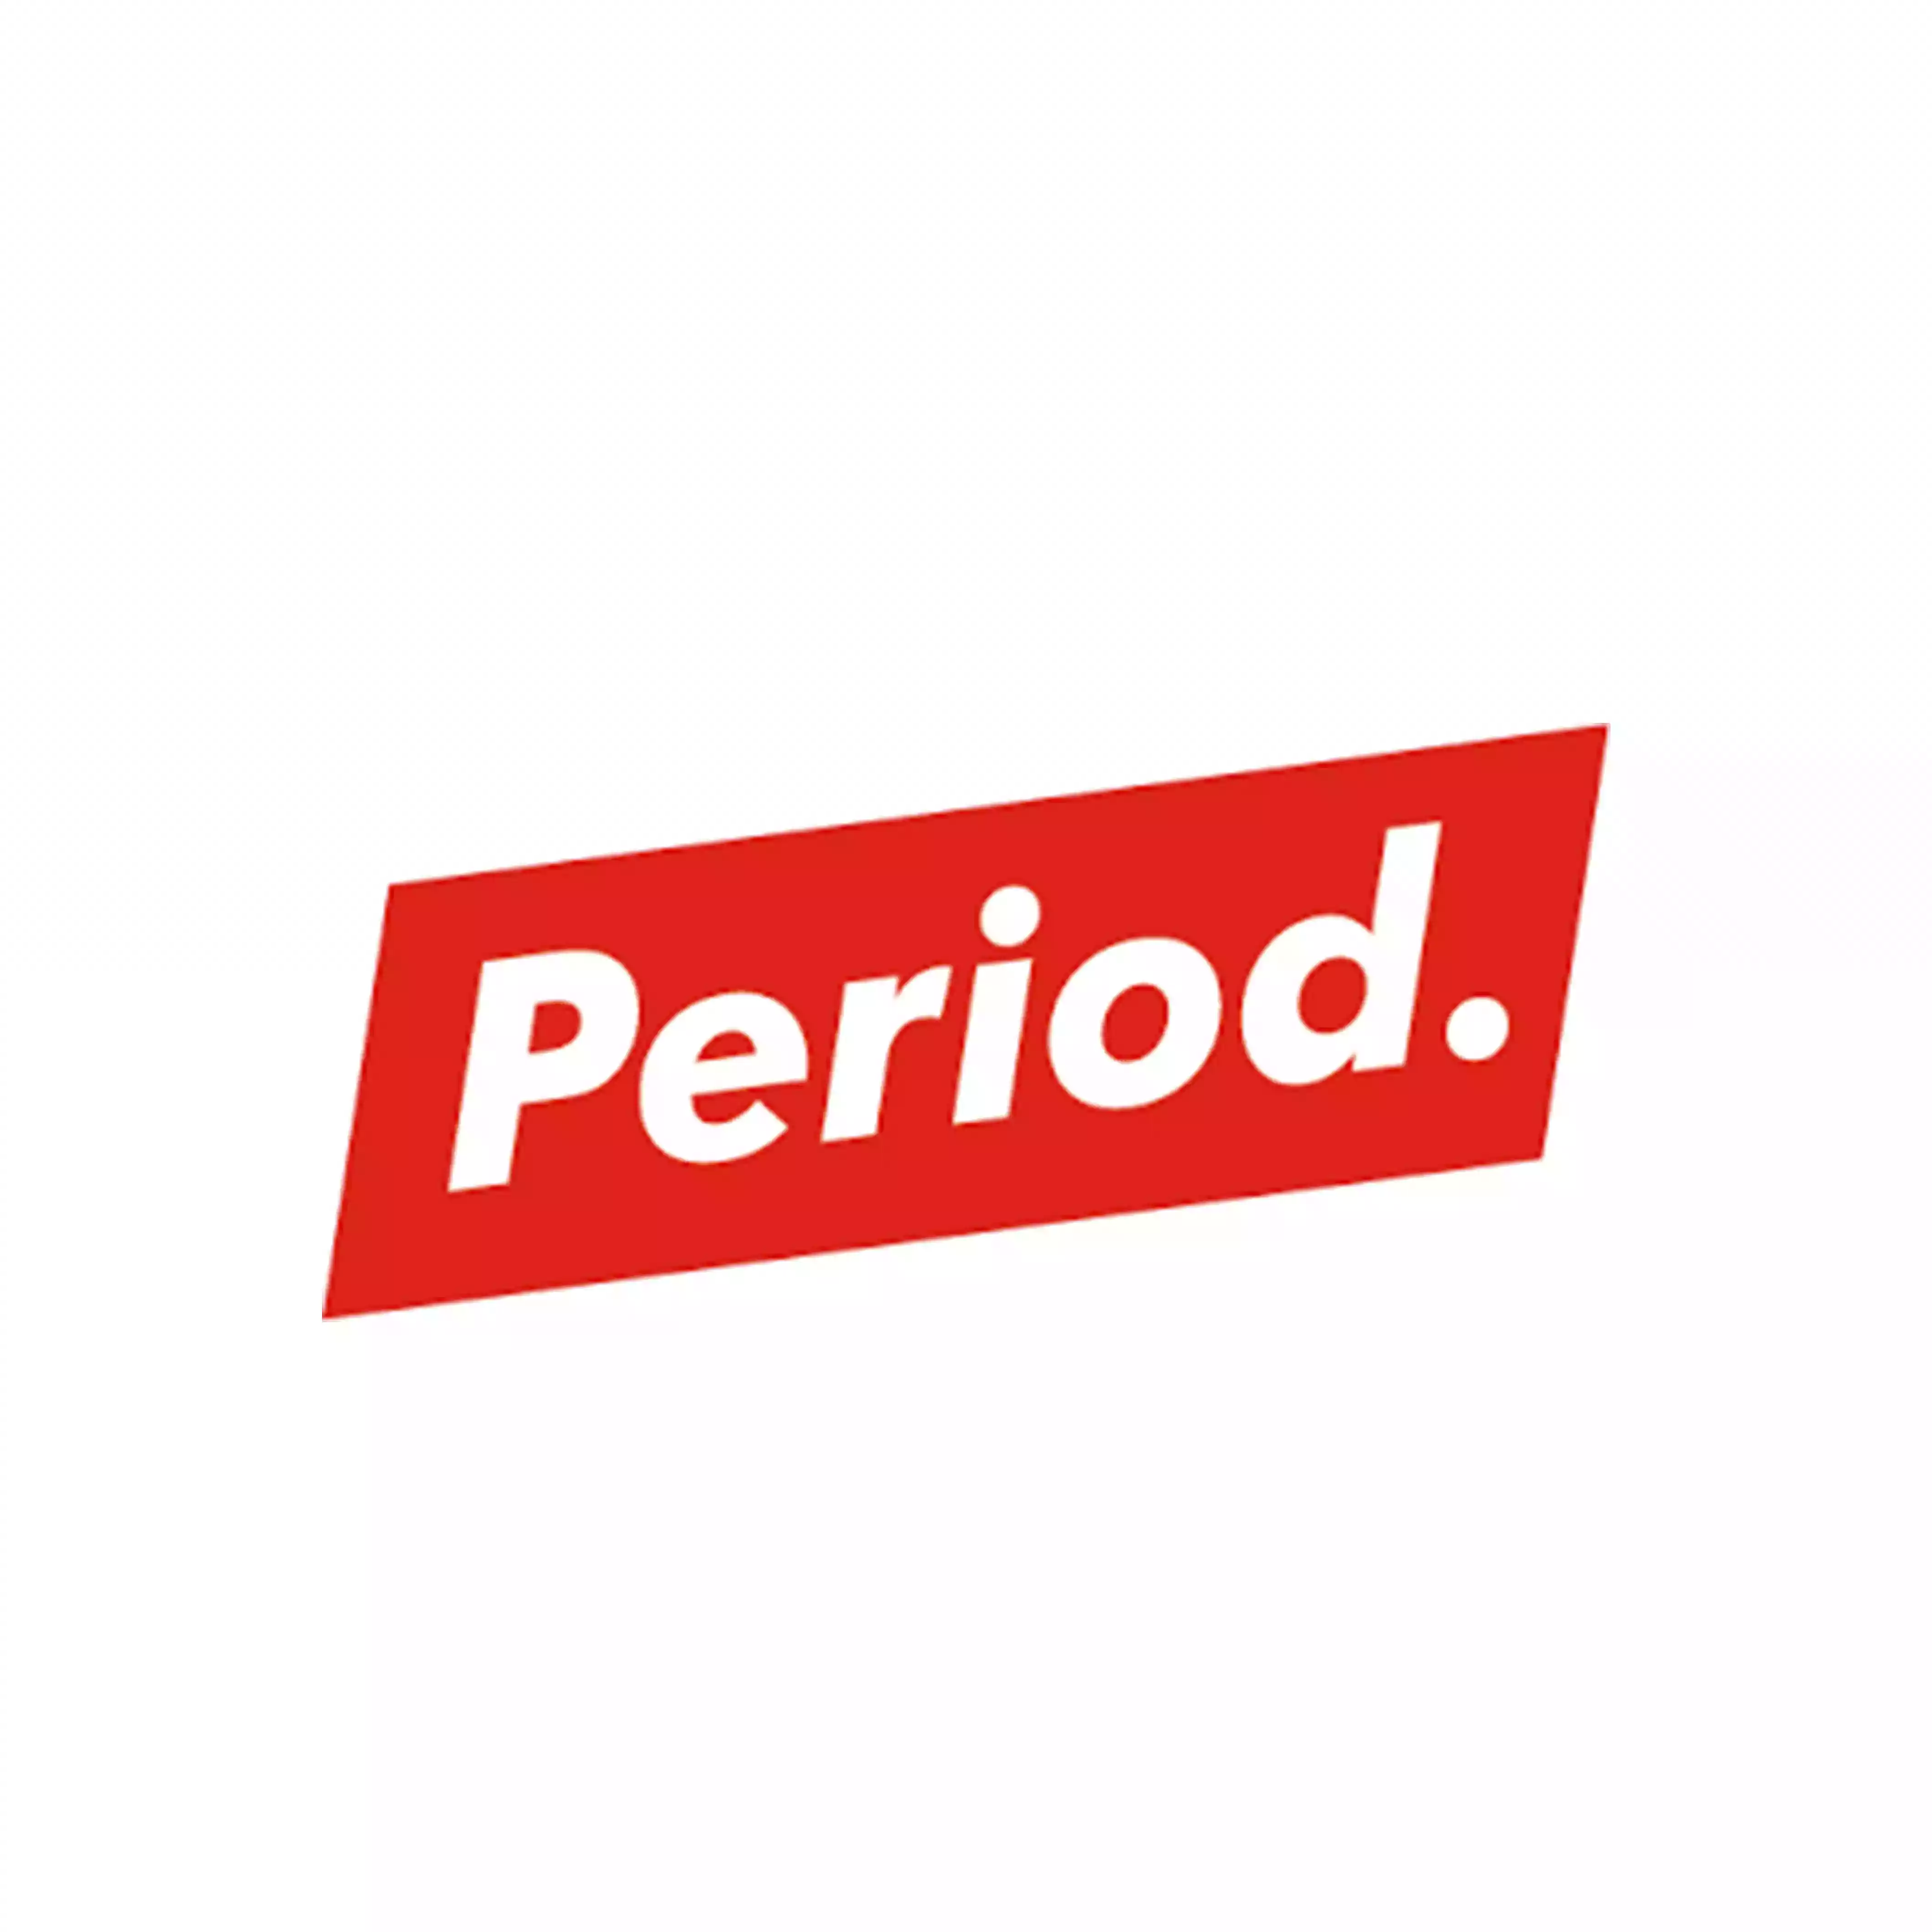 period.co logo